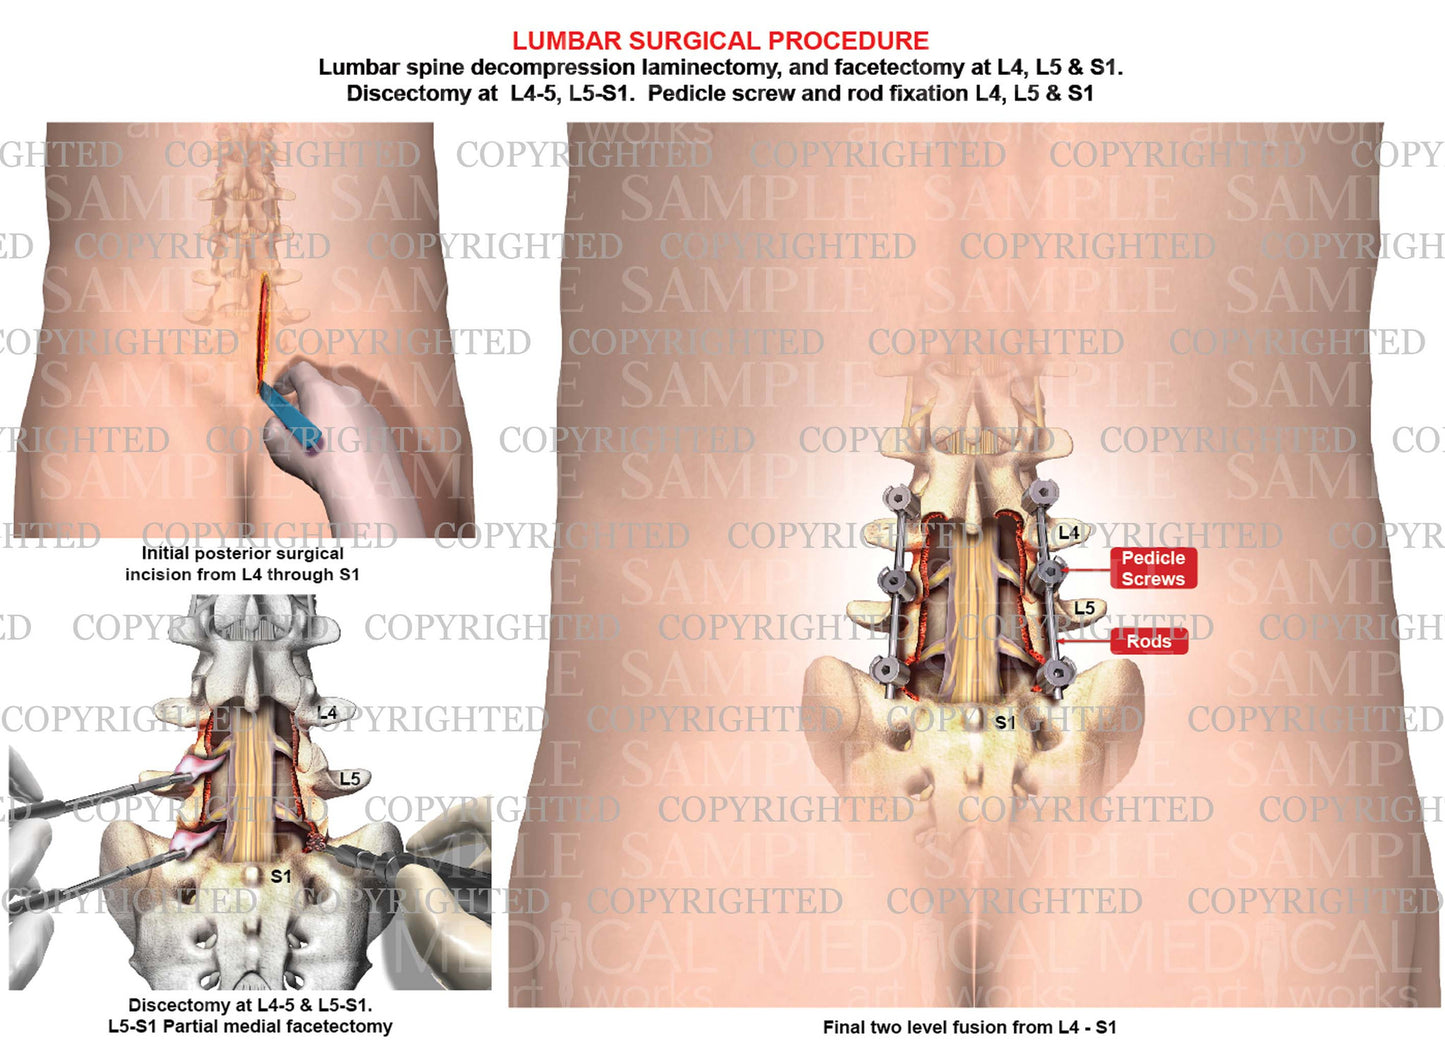 2 level - L4-5 & L5-S1 Lumbar spine fusion - discectomies